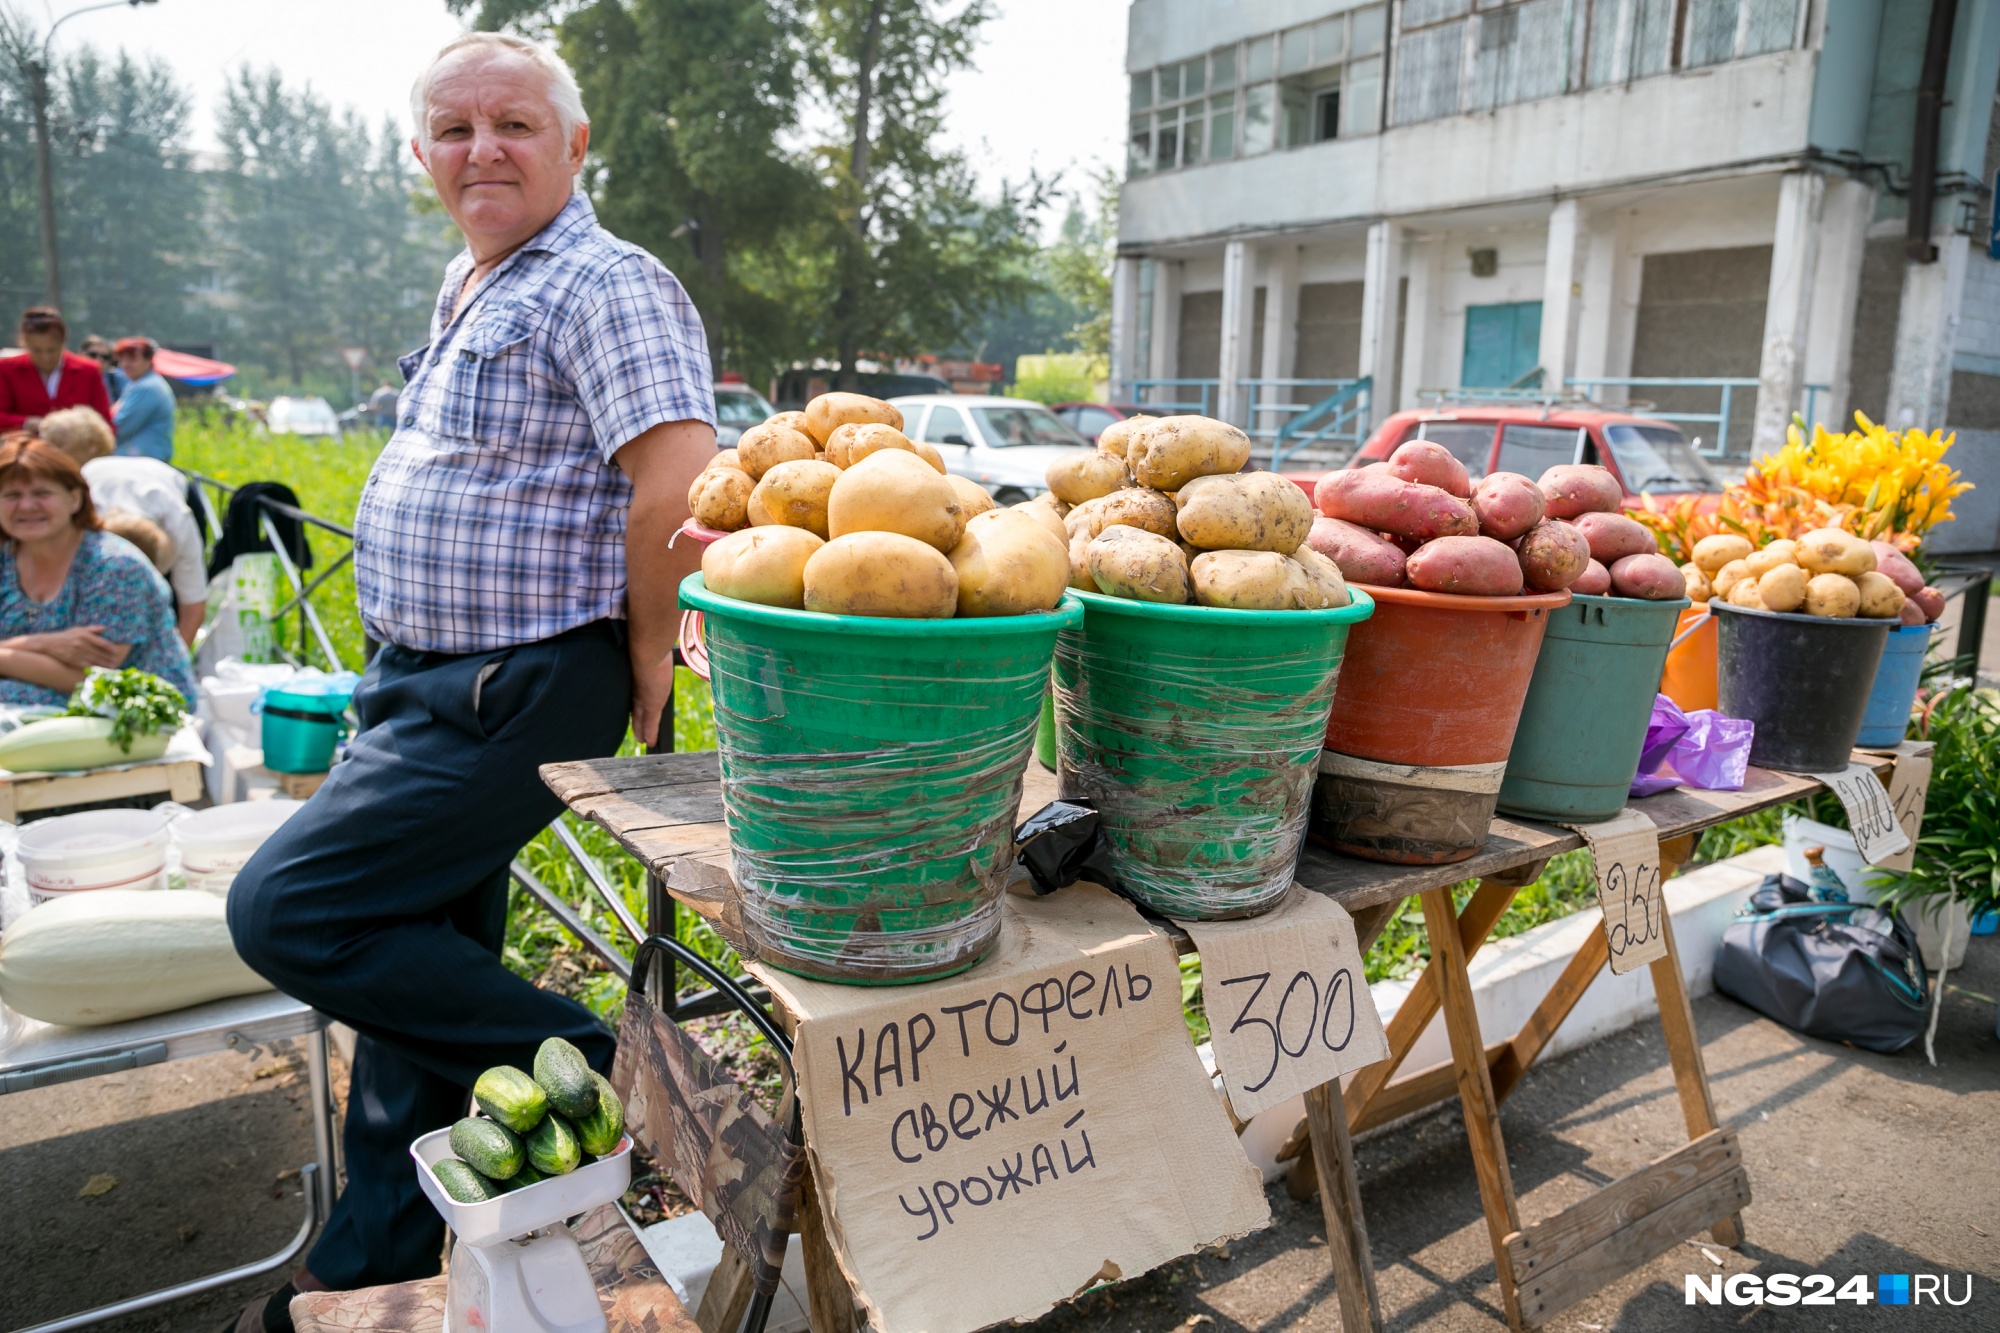 Ведро свежей картошки можно купить за 300 рублей 